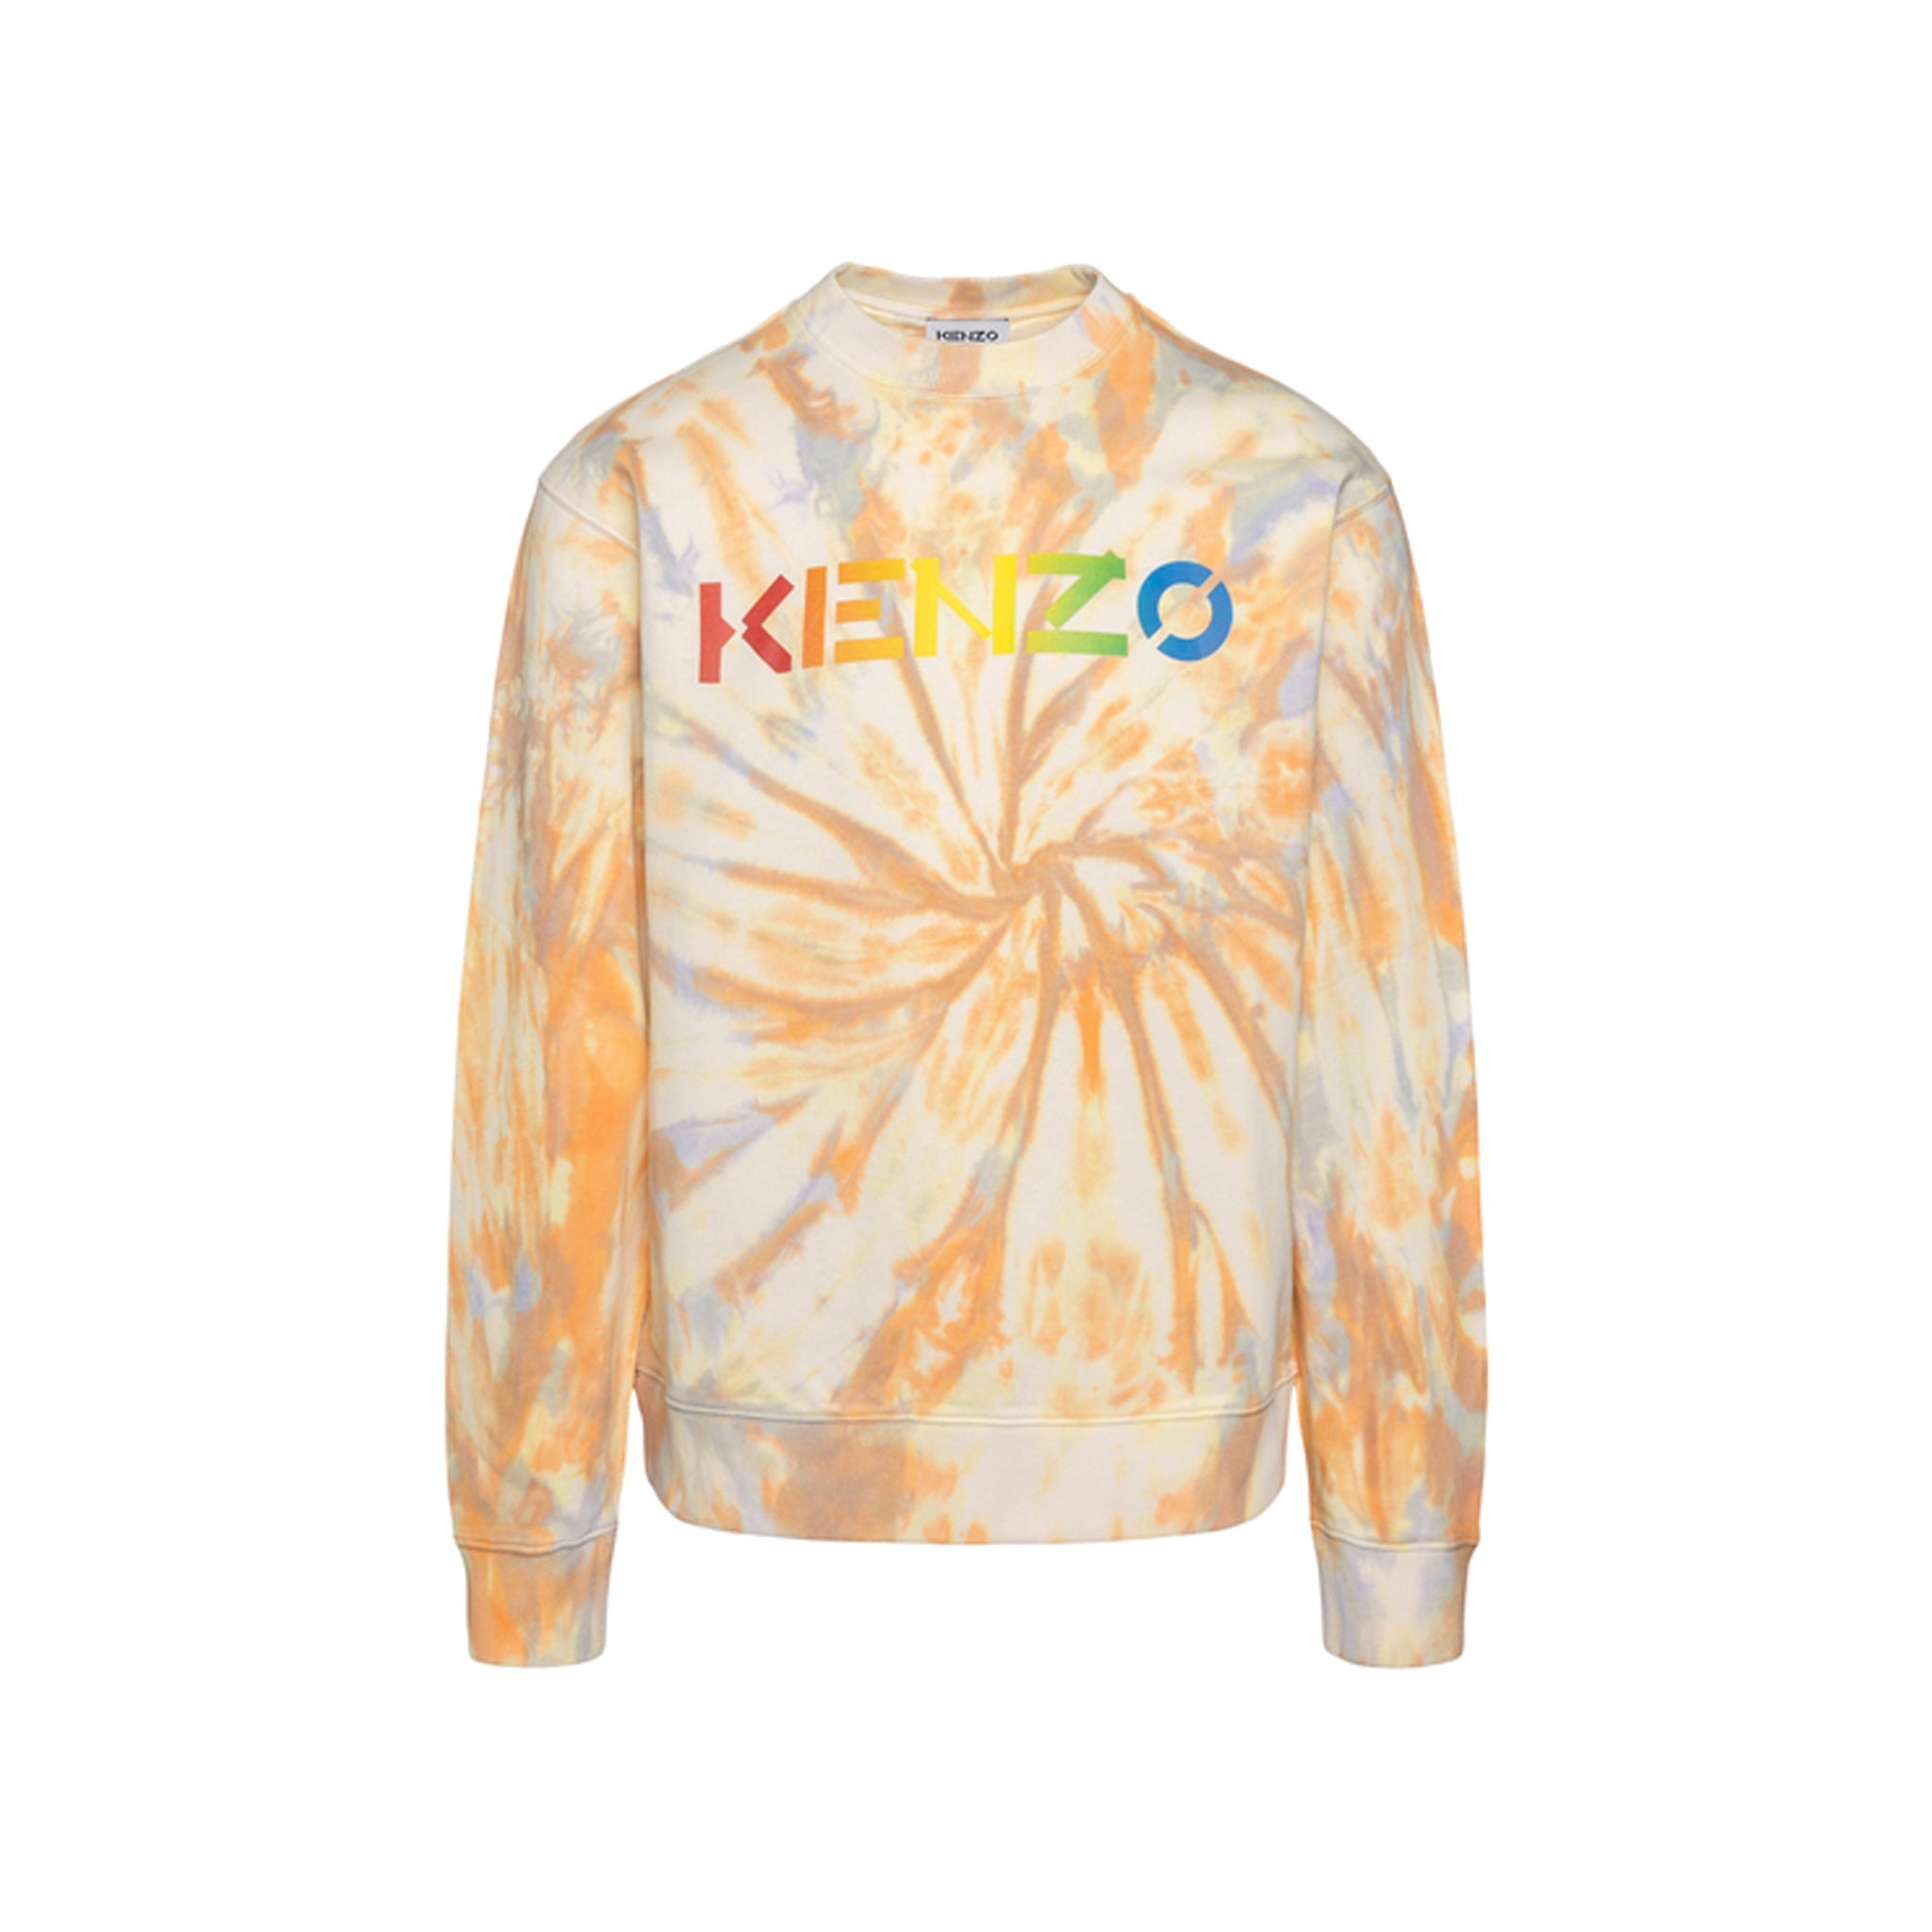 KENZO-OUTLET-SALE-Kenzo-Printed-Sweatshirt-Shirts-ORANGE-S-ARCHIVE-COLLECTION.jpg